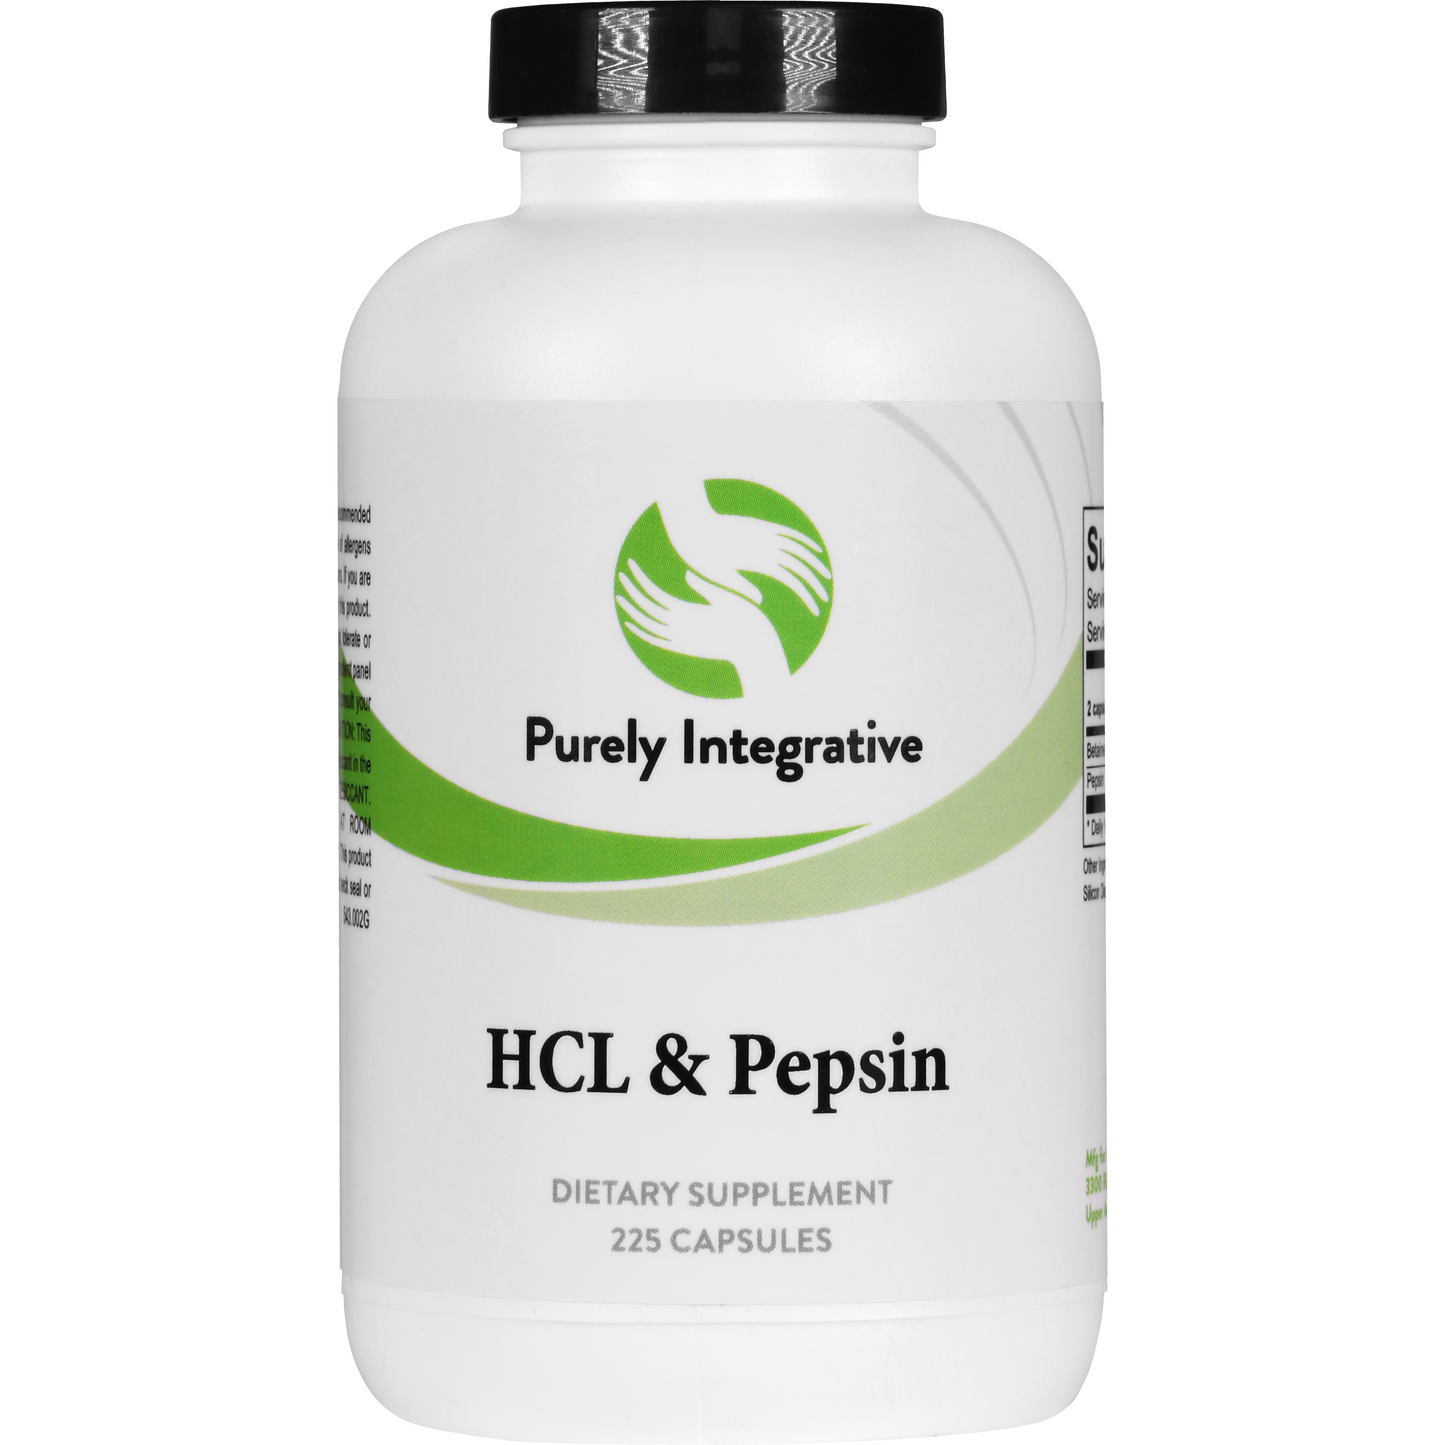 HCL & Pepsin